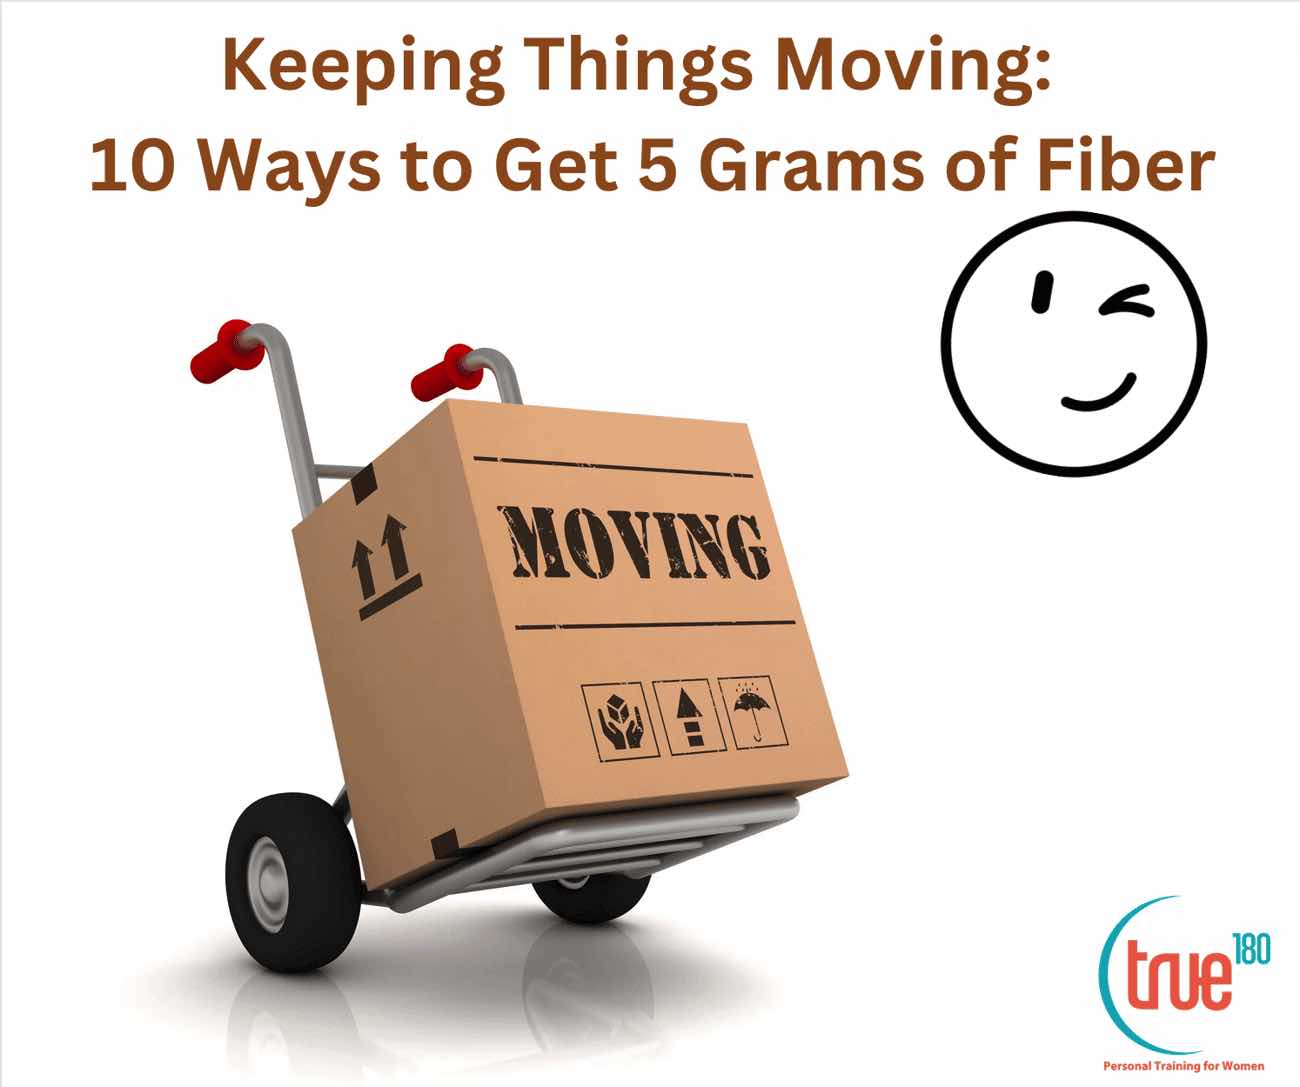 Keeping Things Moving: 10 Ways to Get 5 Grams of Fiber